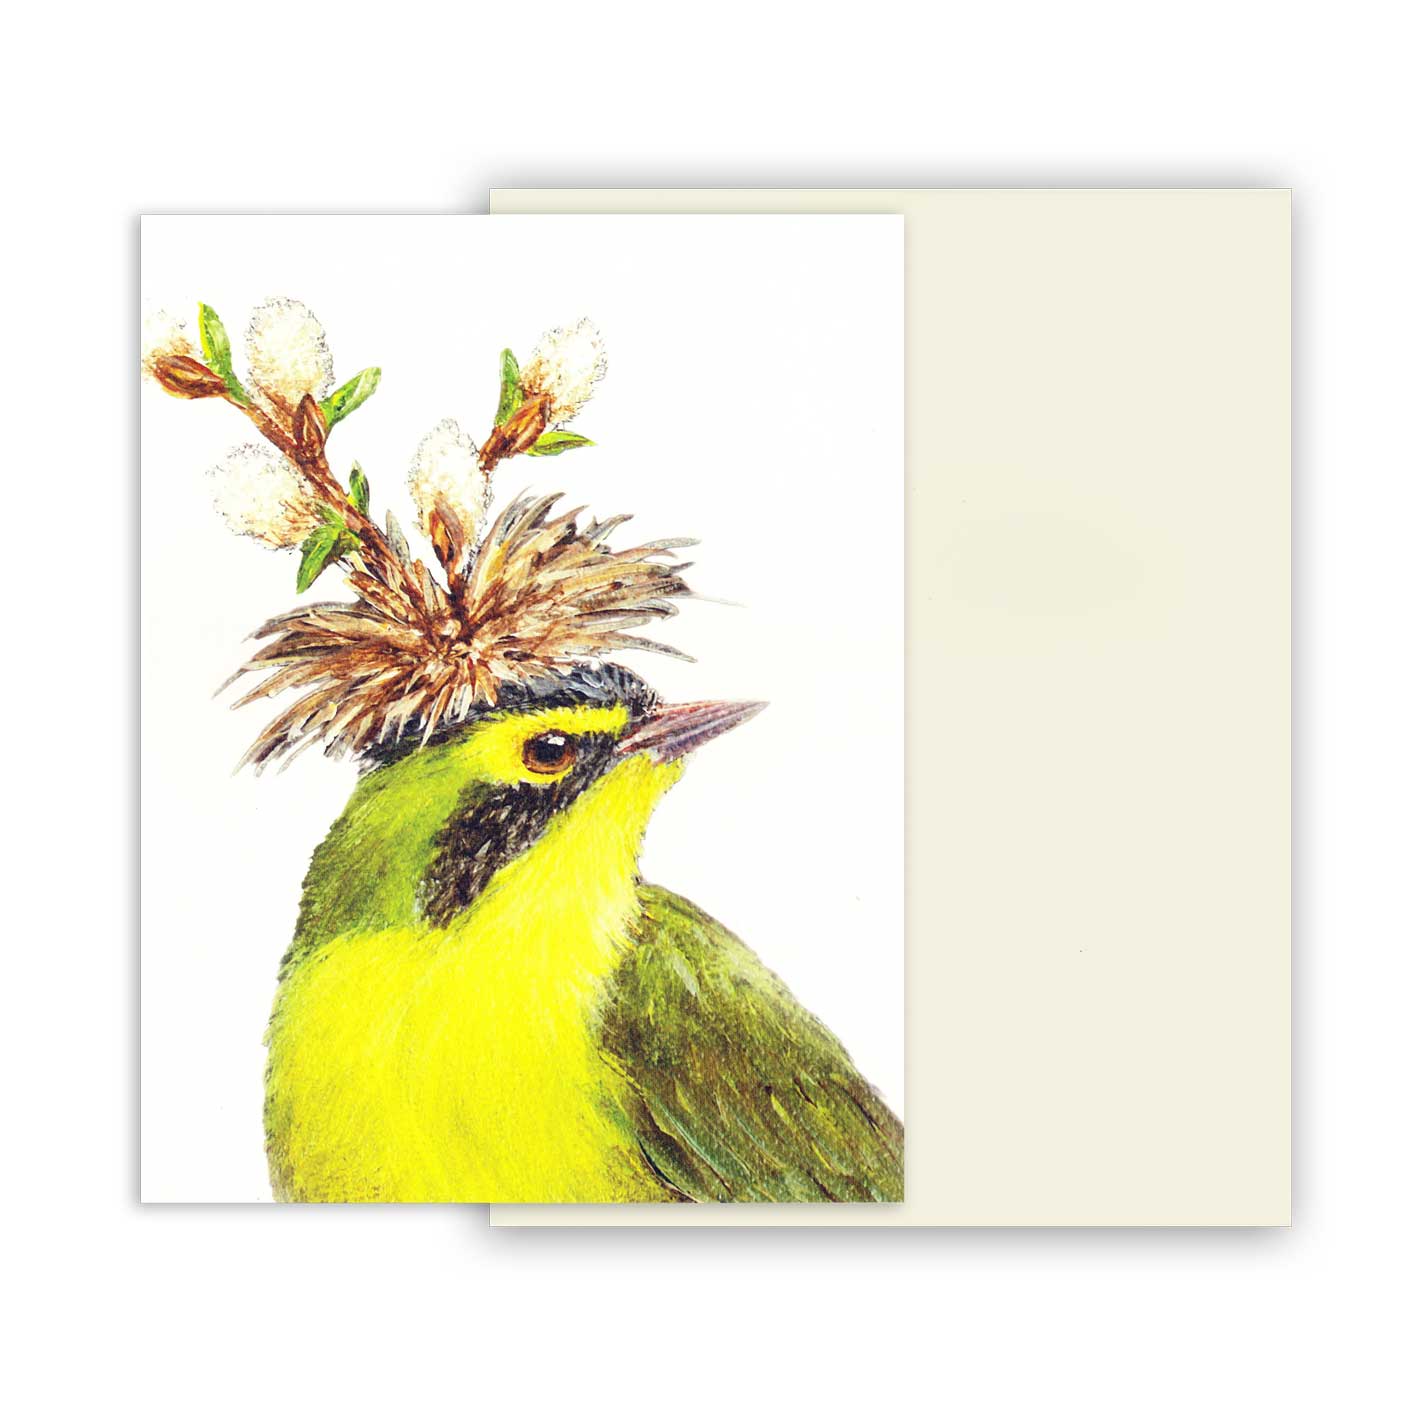 Grußkartenset "SONGBIRD PORTRAID SIGNATURE" von Hester & Cook incl. Kuvert 